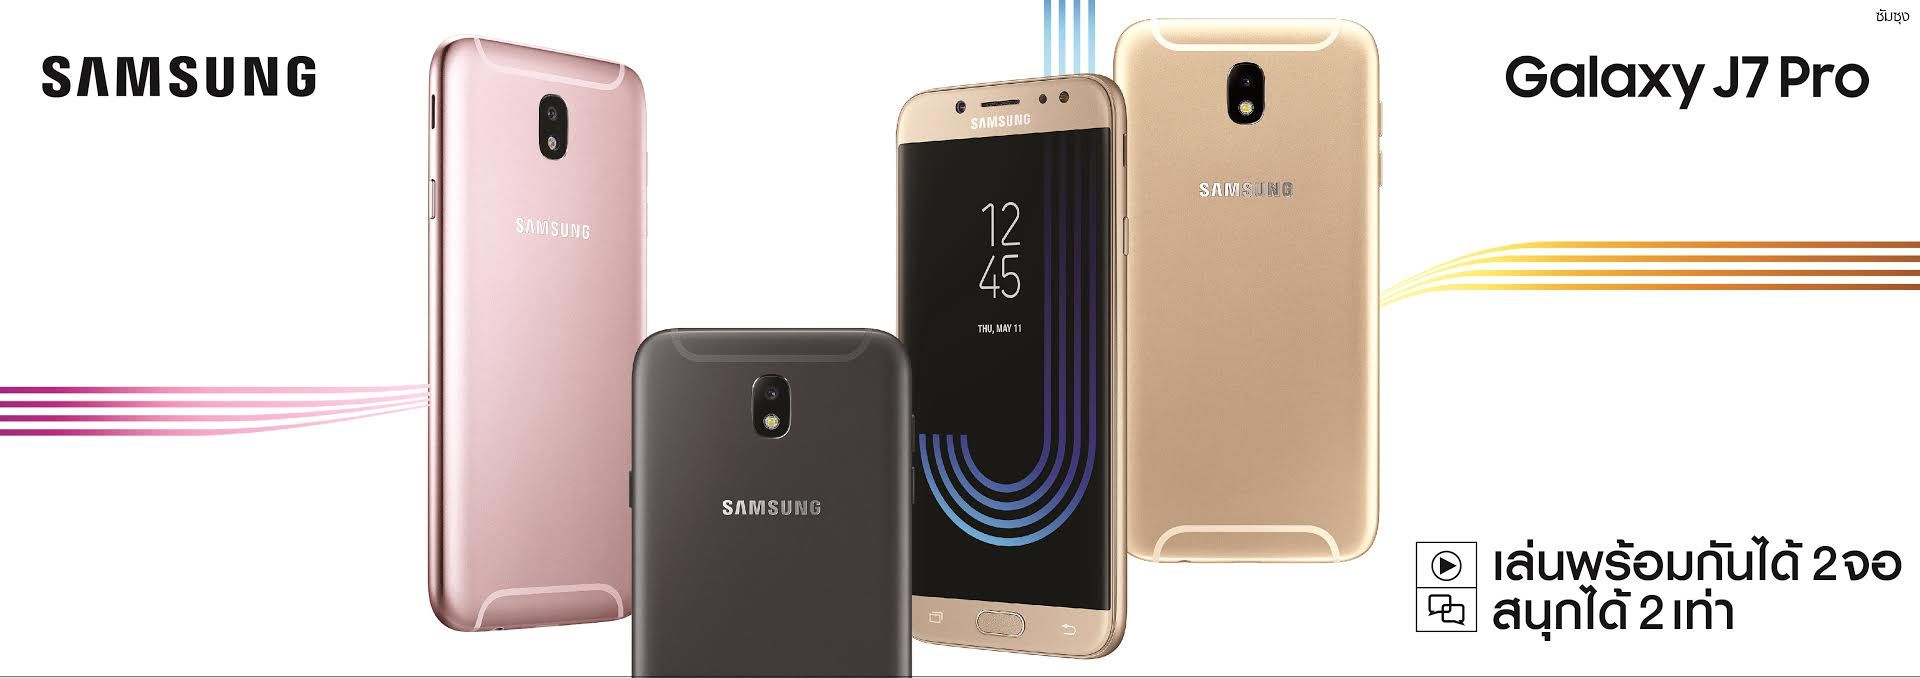 Samsung เปิดตัวน้องใหม่ Galaxy J7 Pro สเปคจัดเต็มในราคา 10,900 บาท